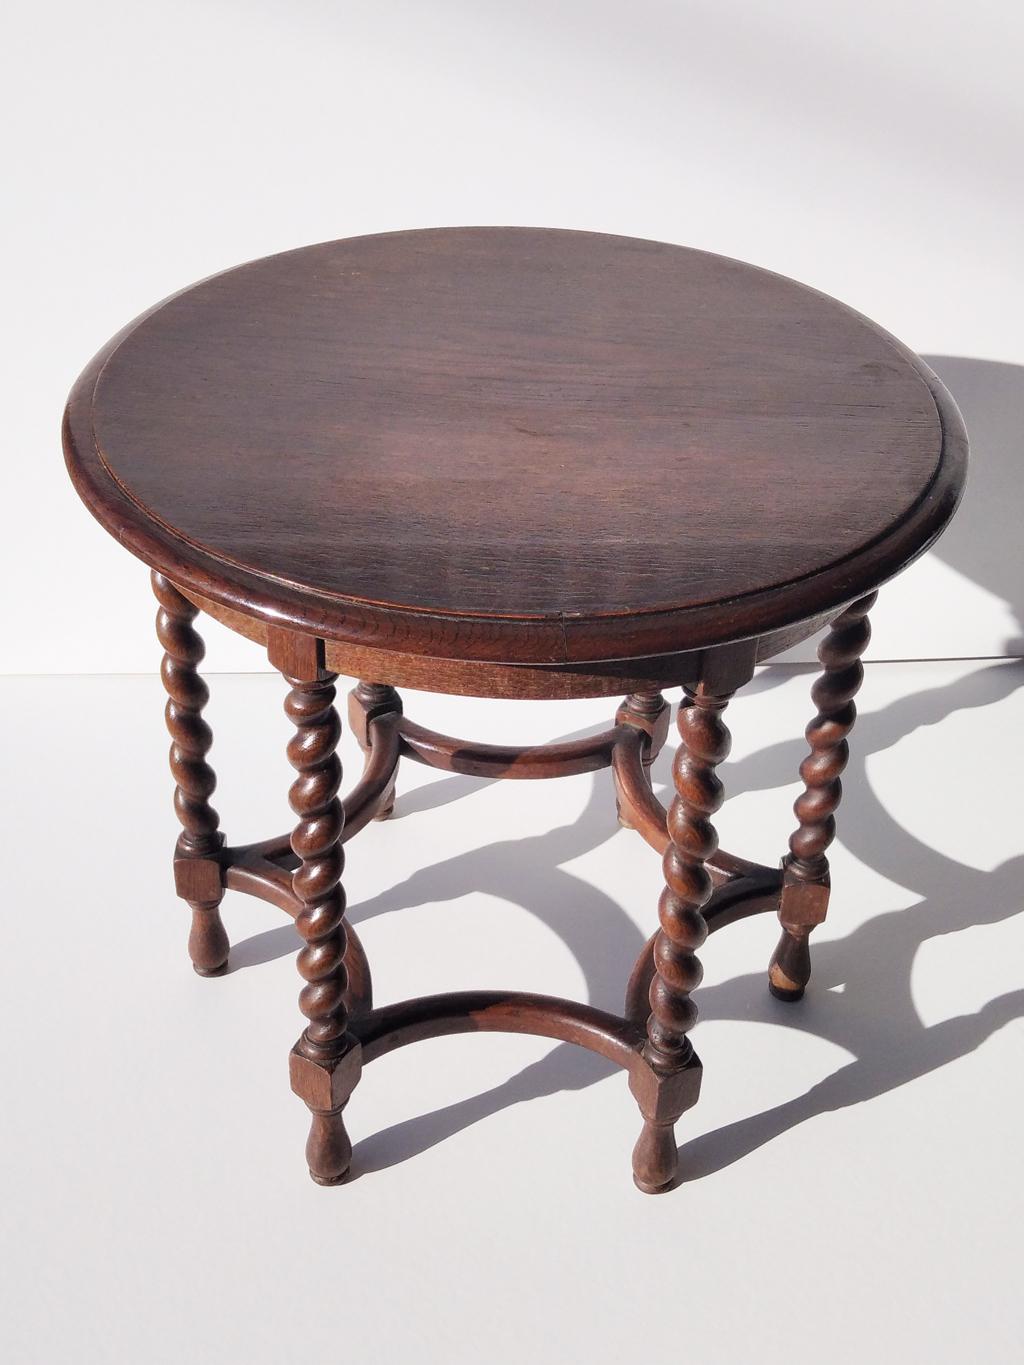 Wood Round Side Table Barley Twist Legs, Late 19th Century